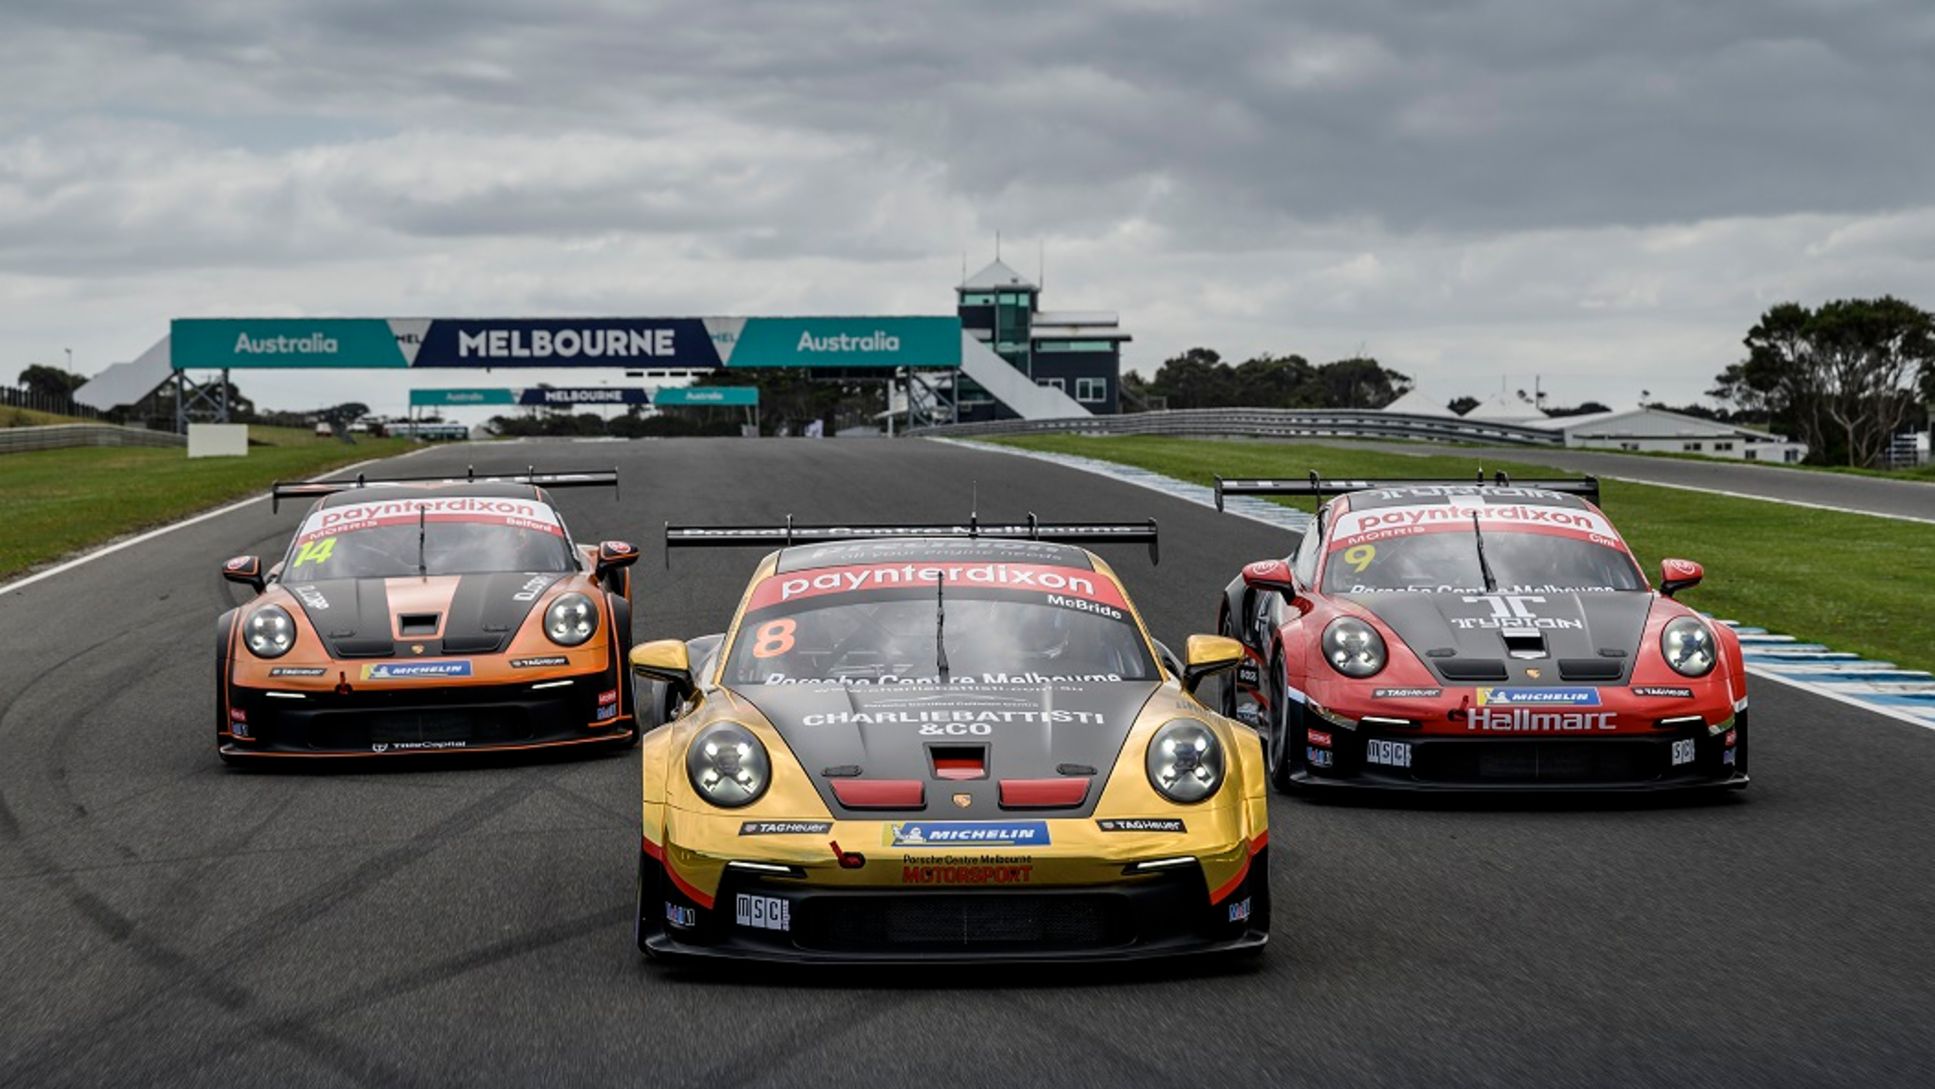 Record 31 Porsche Paynter Dixon Carrera Cup Australia grid for historic  2022 season opener - Porsche Newsroom AUS